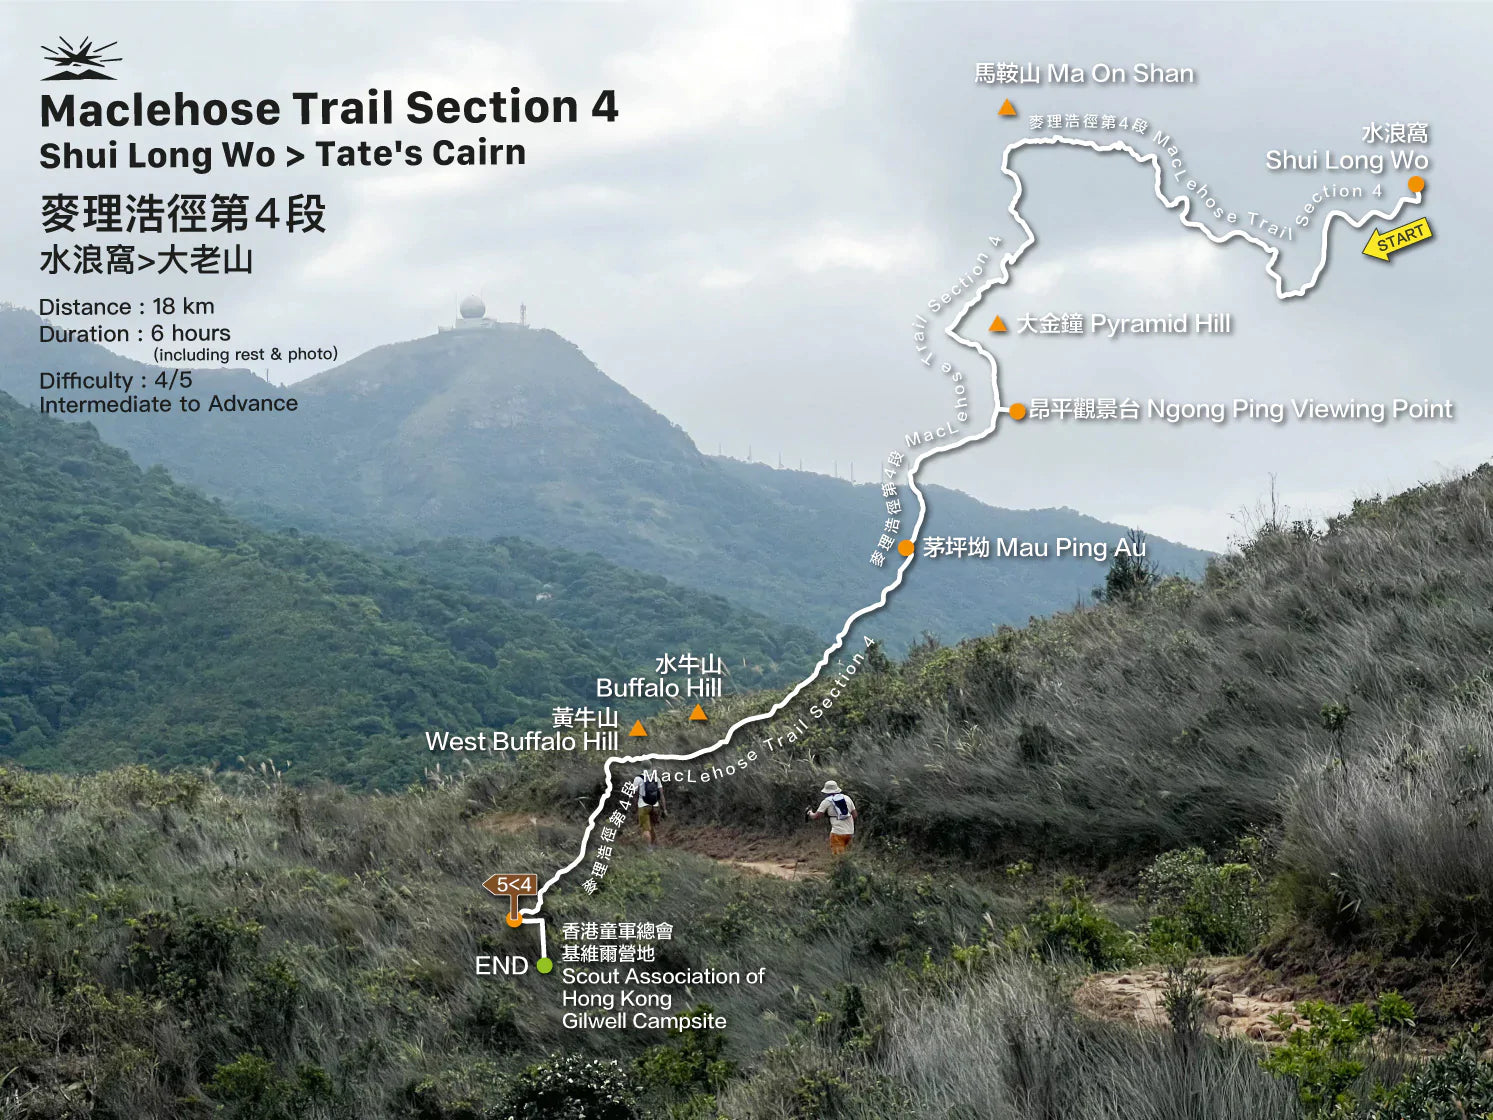 MacLehose Trail Section 4 | Shui Long Wo to Tate's Cairn